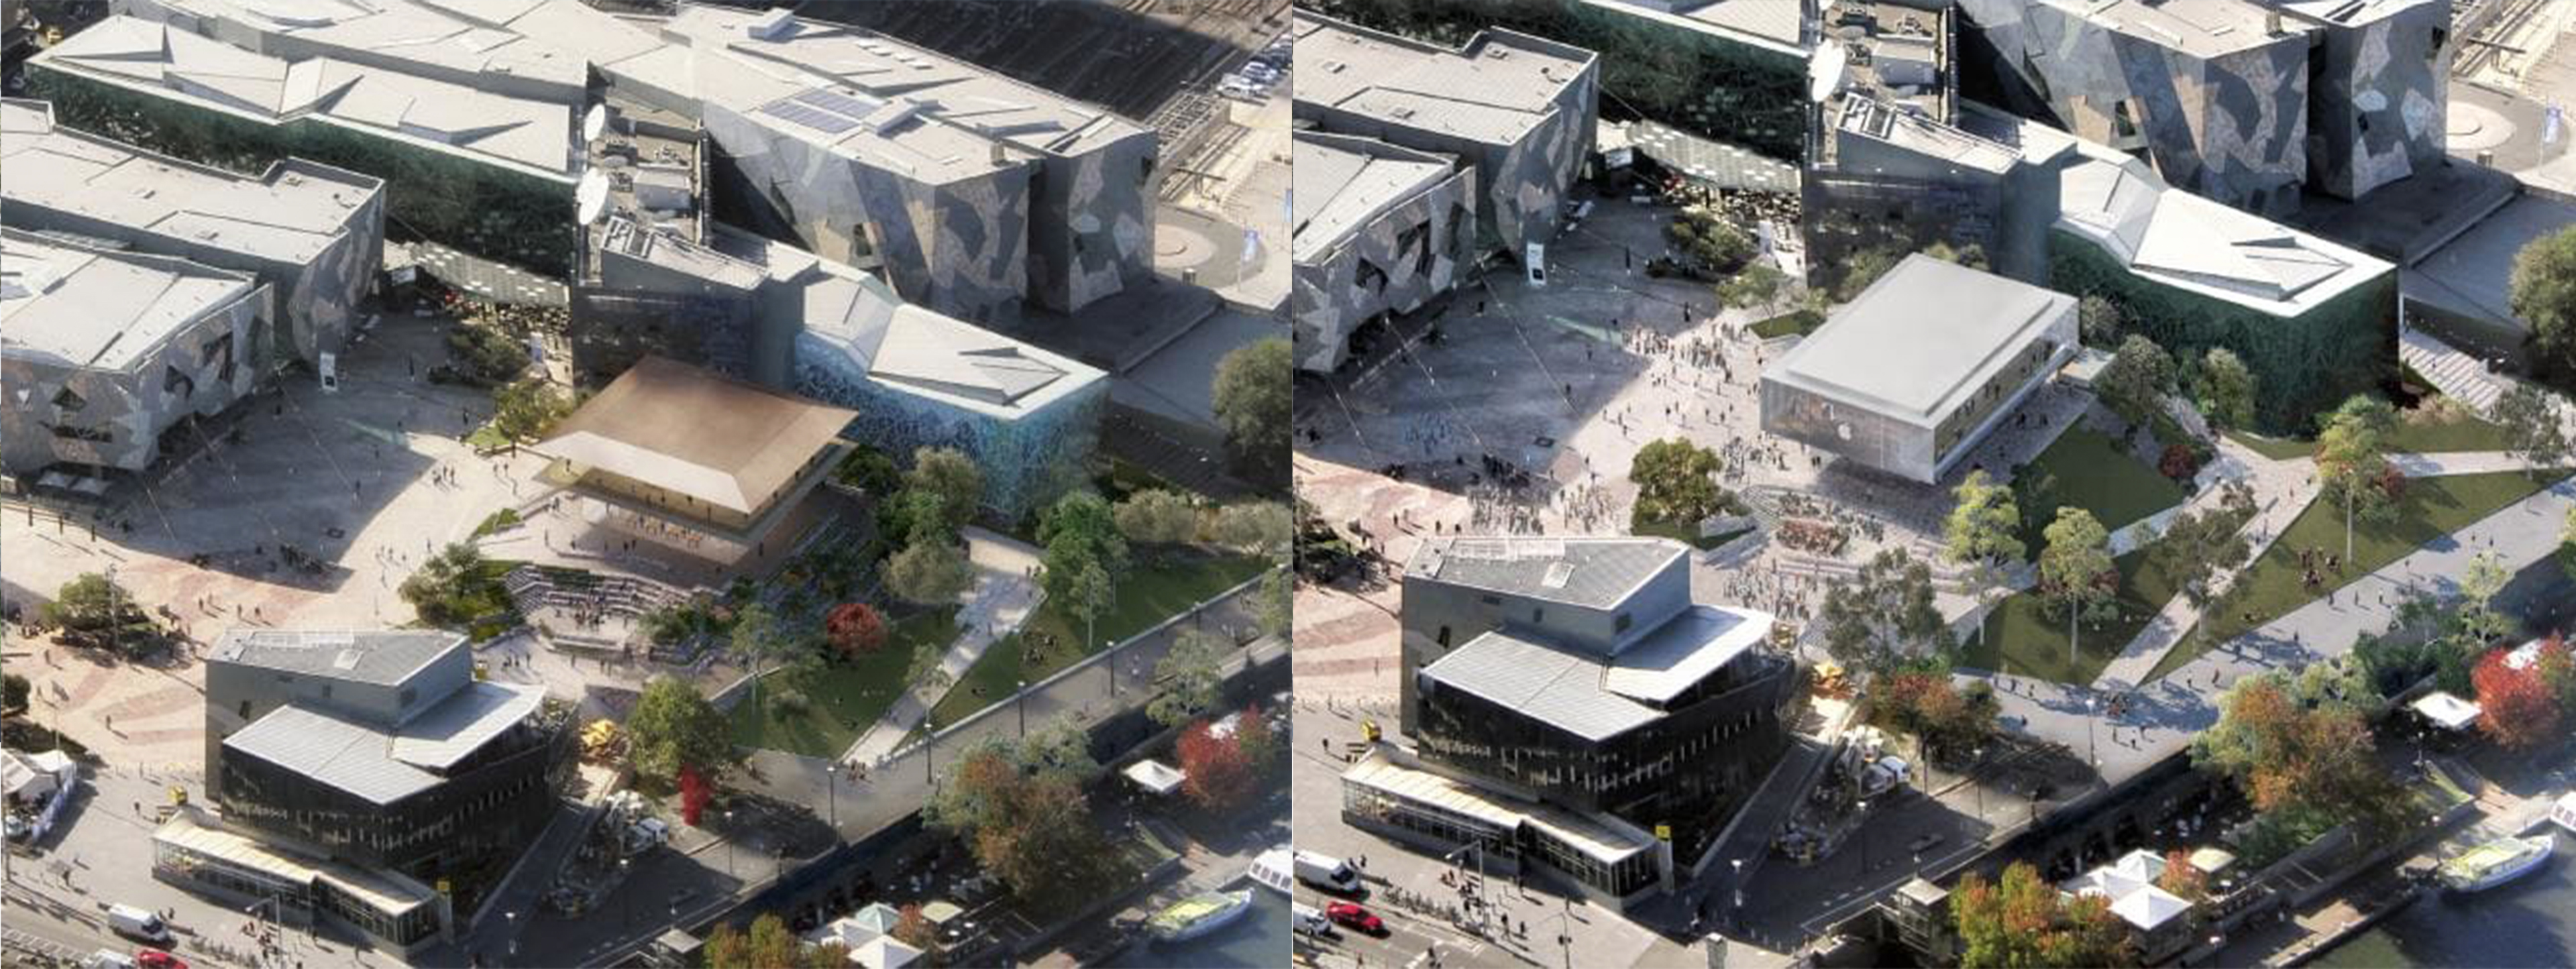 New Apple Federation Square project in Melbourne, Australia